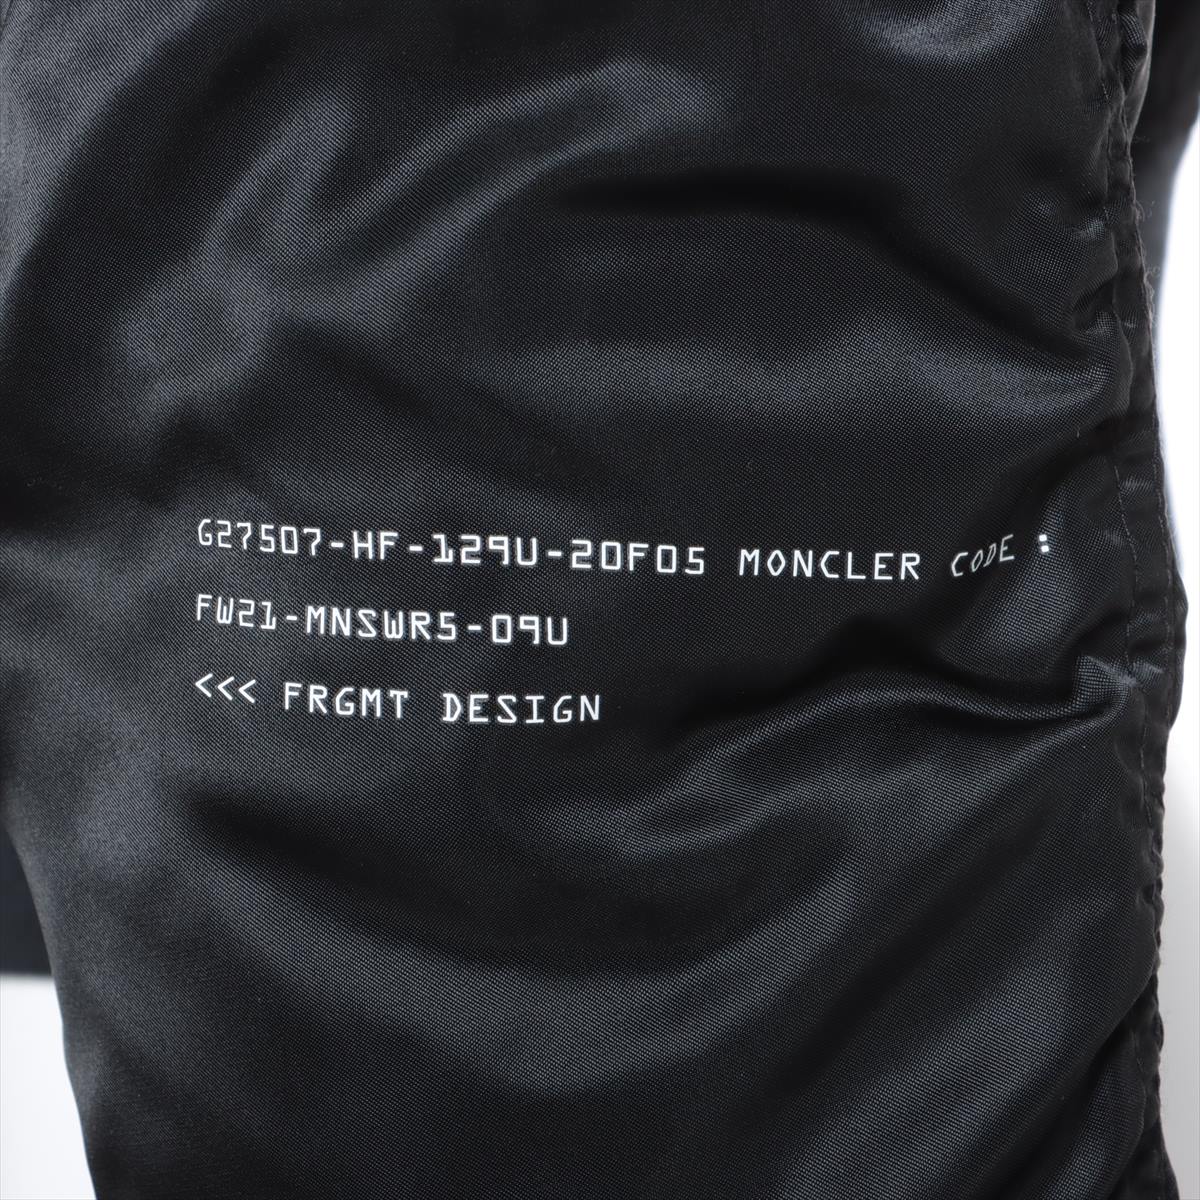 Moncler Genius Fragment 21 years Nylon Down jacket 1 Men's Black  RASSOS MA-1